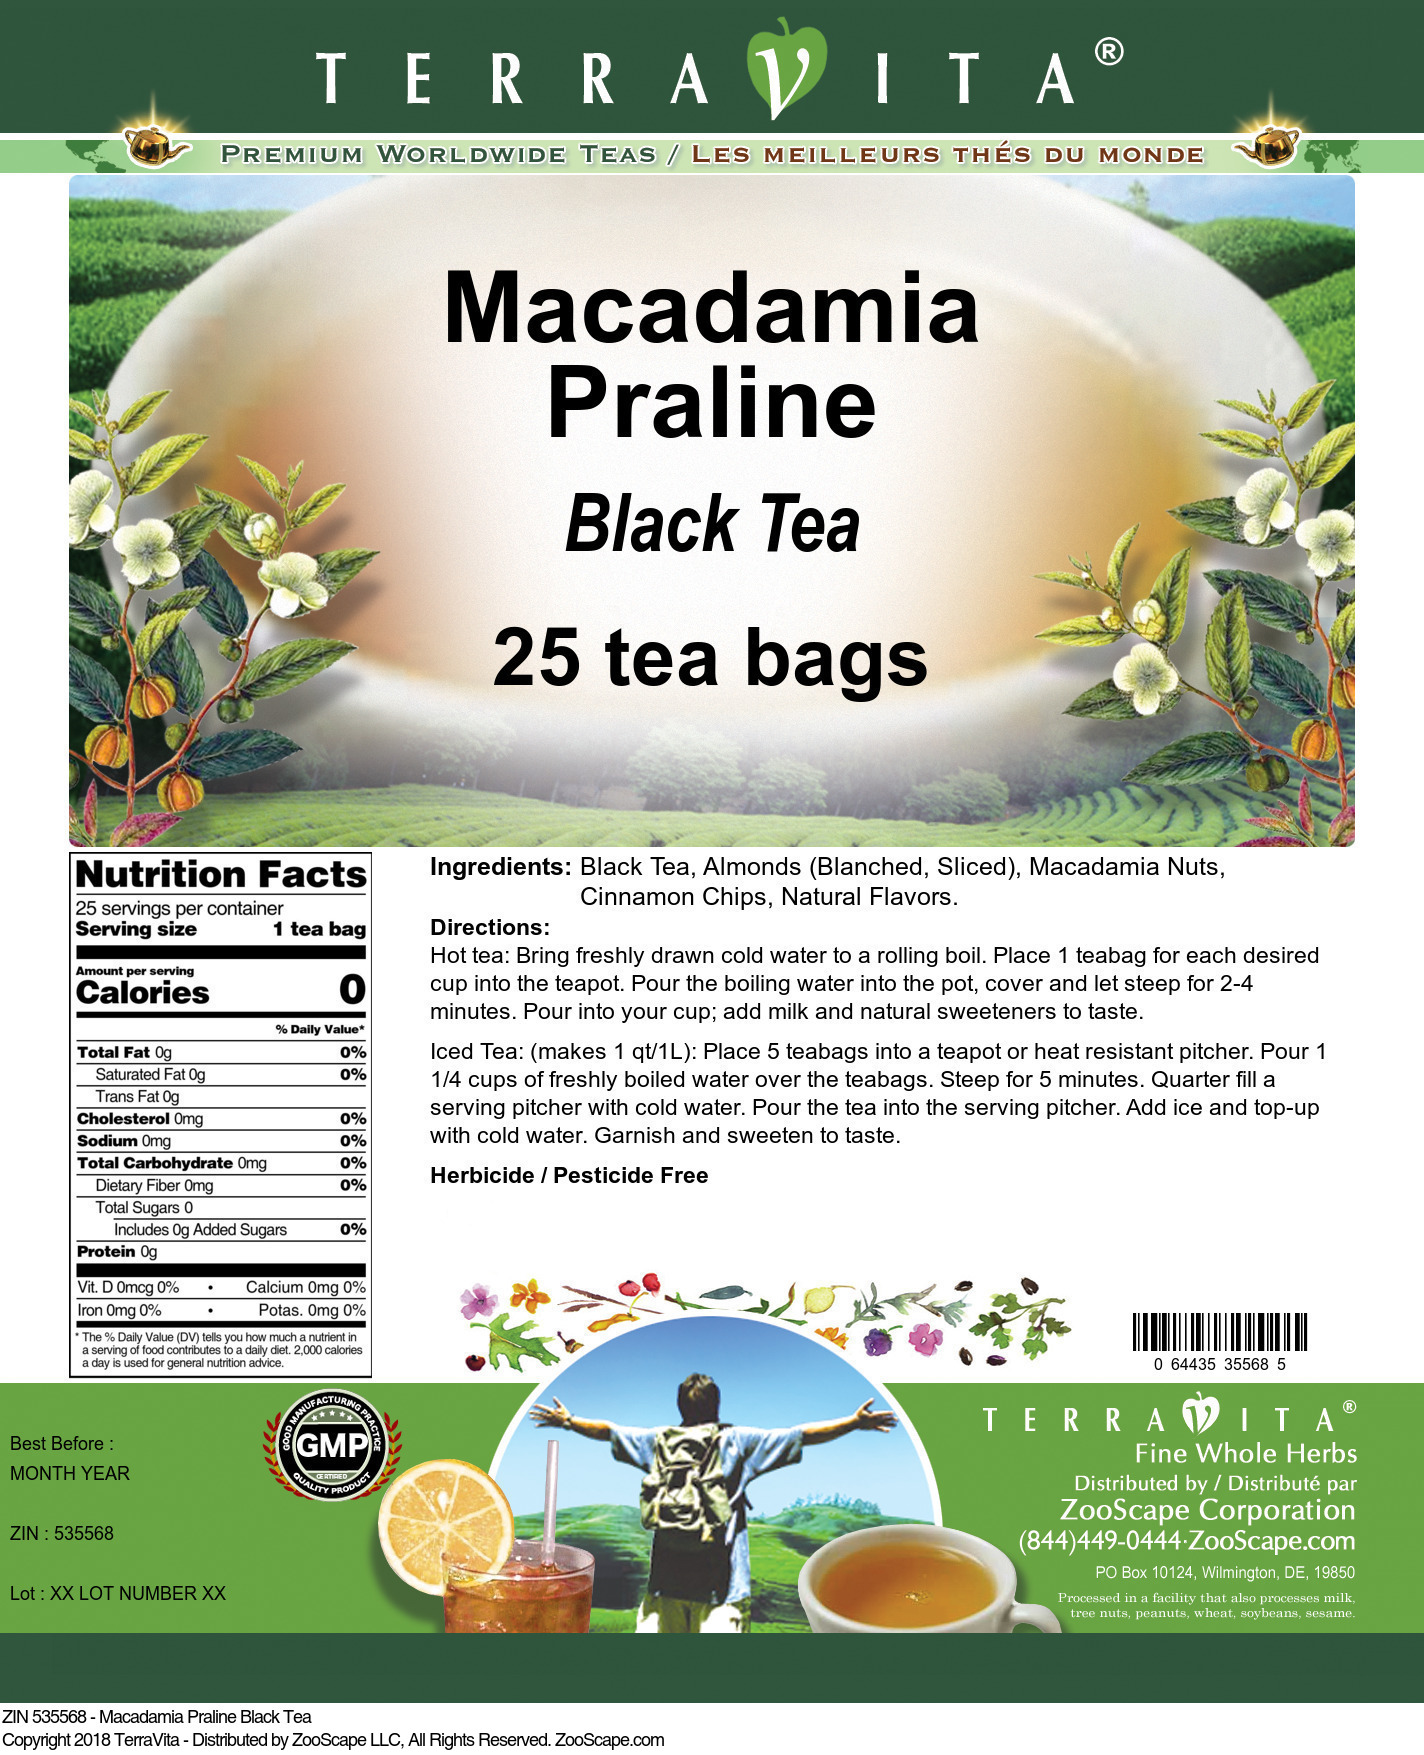 Macadamia Praline Black Tea - Label